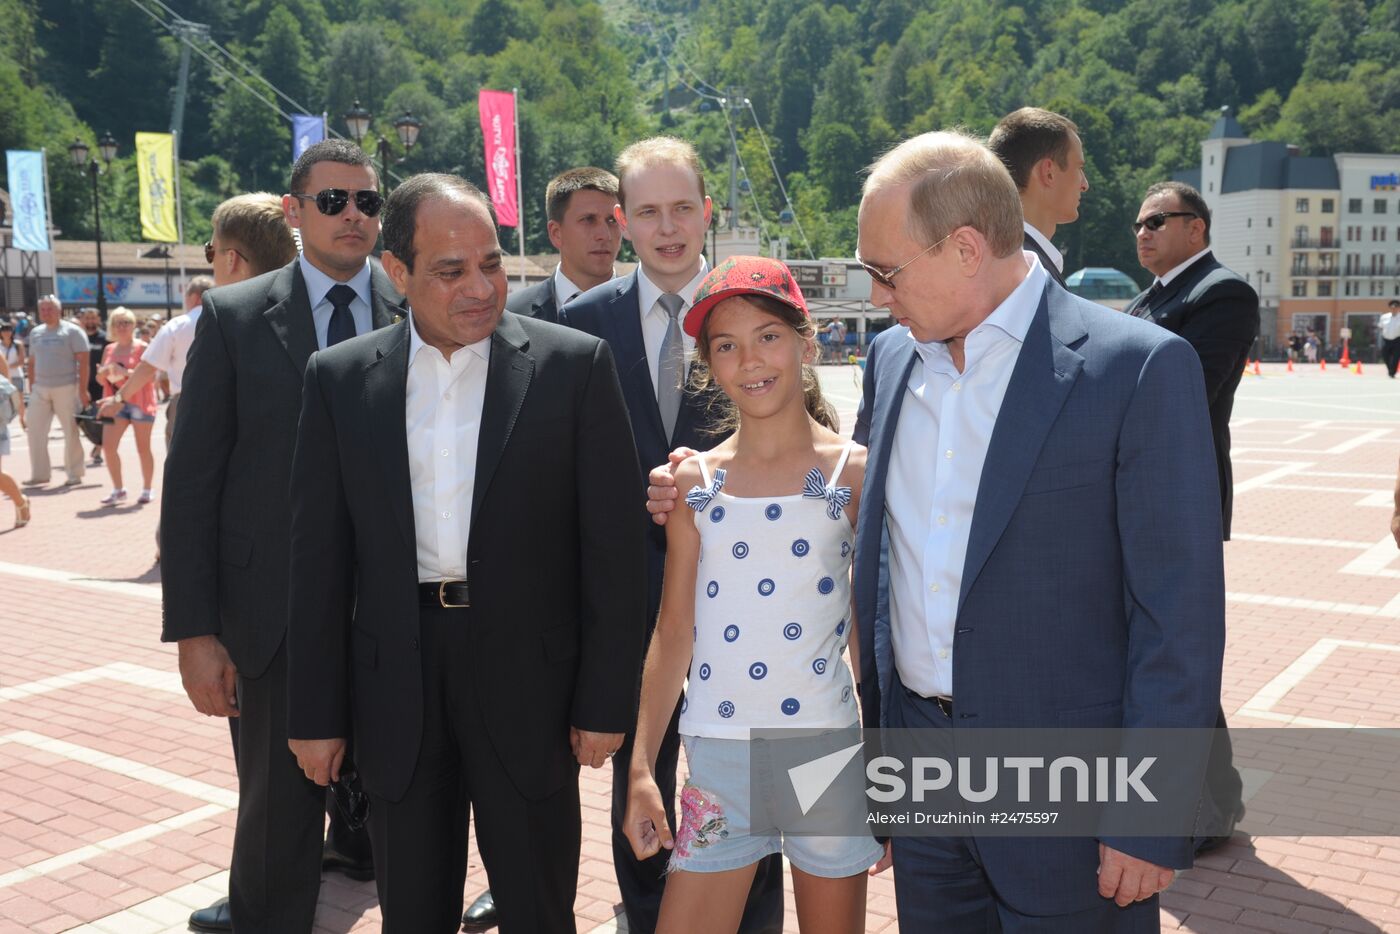 Vladimir Putin meets with Abdel Fattah al-Sisi in Sochi